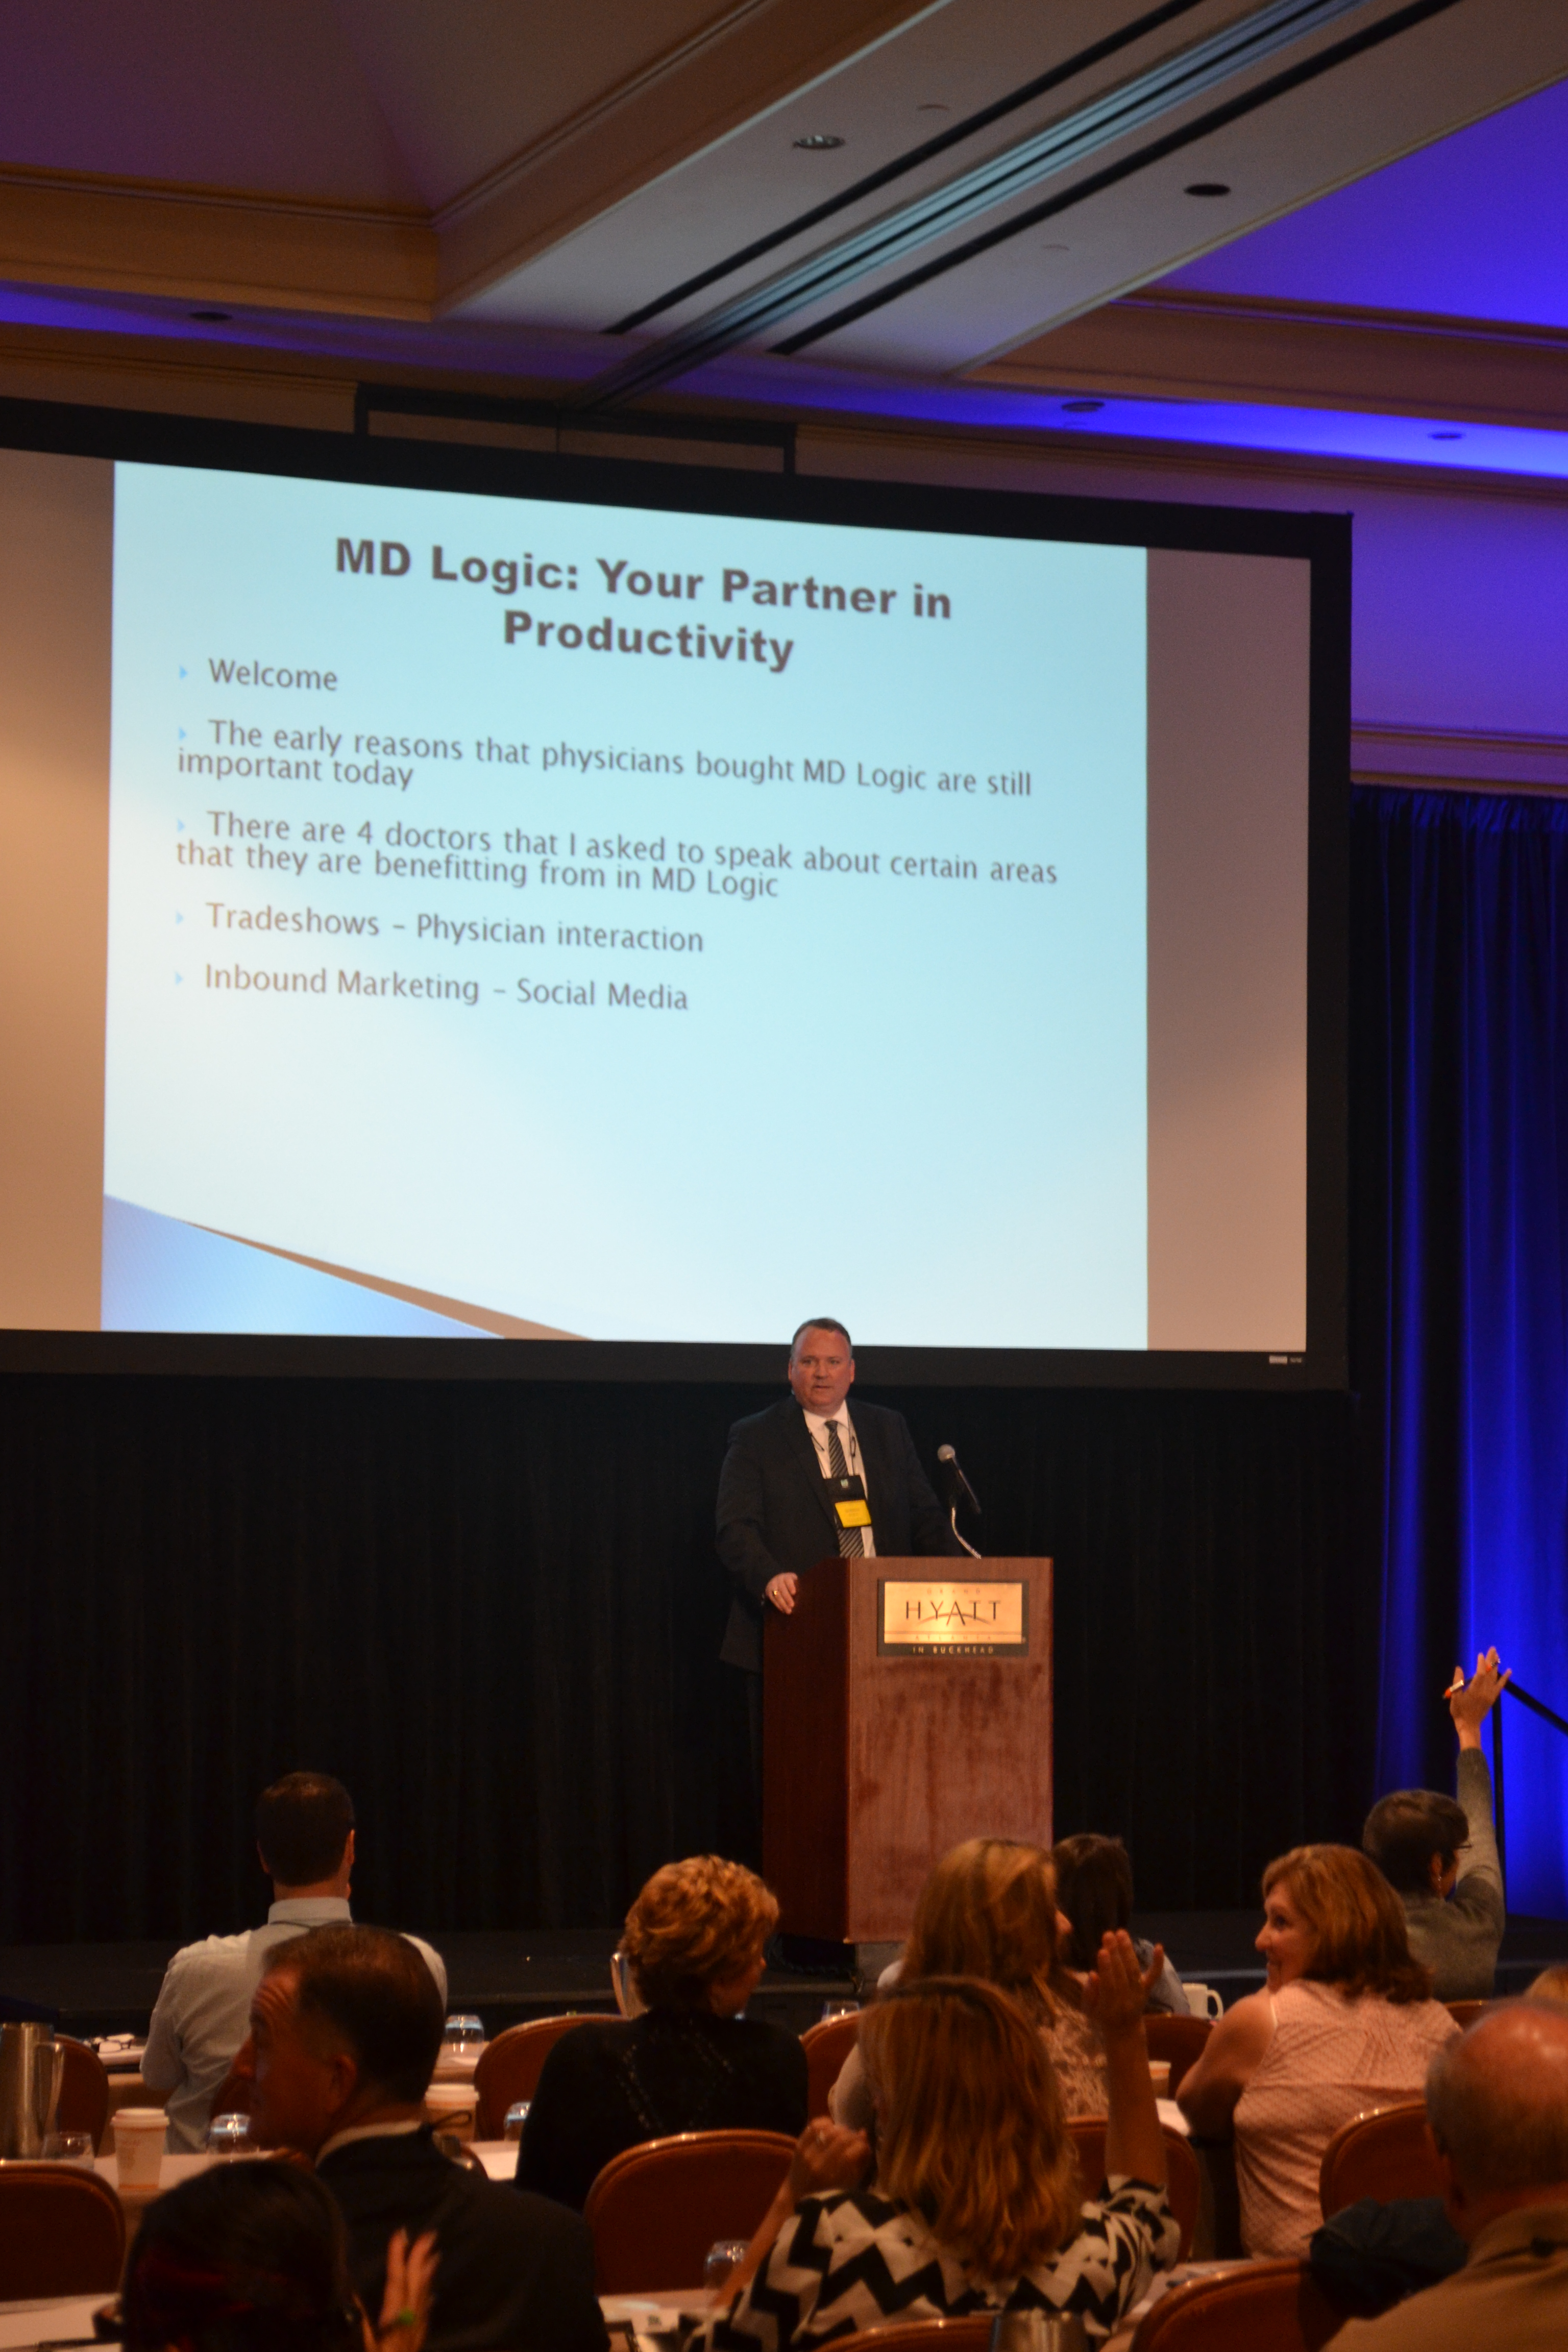 Tim McKenna - VP Sales for MD Logic addresses the audience